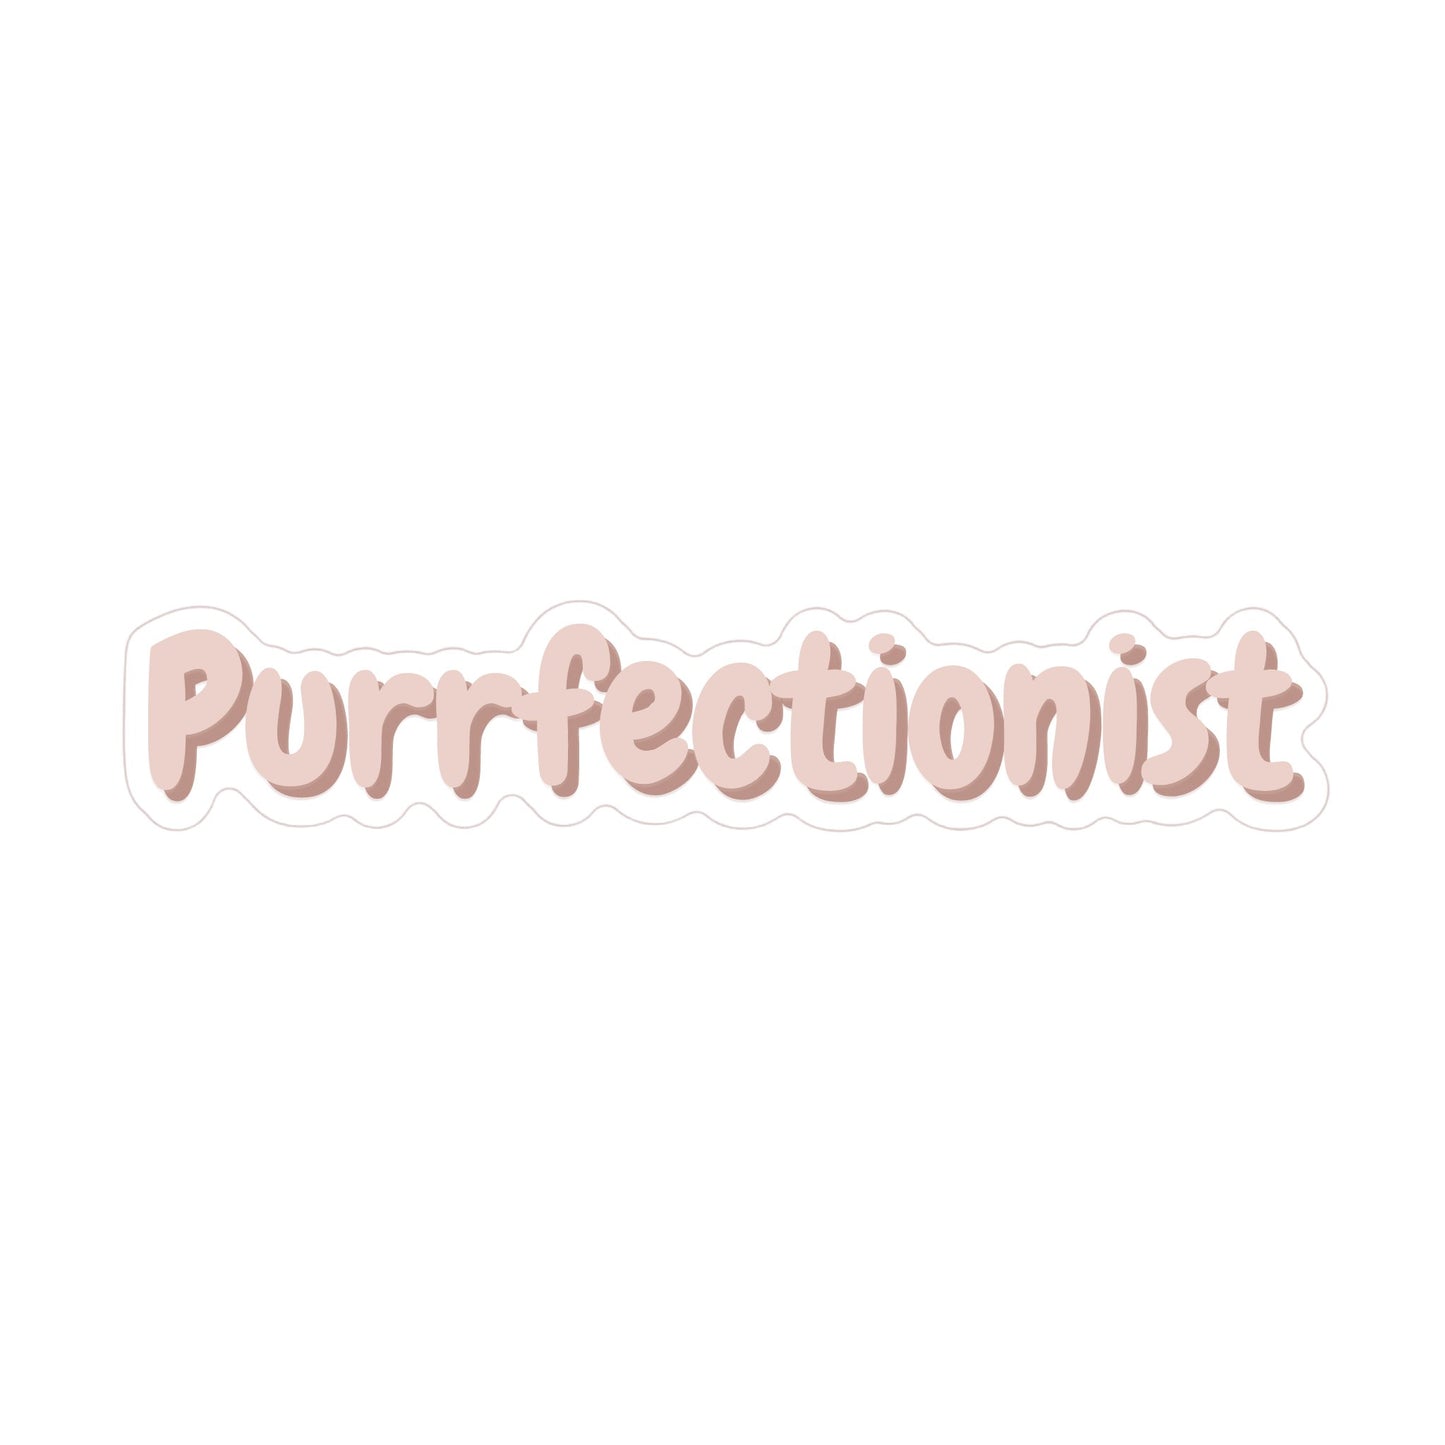 Purrfectionist Sticker - Fur Elise Pets